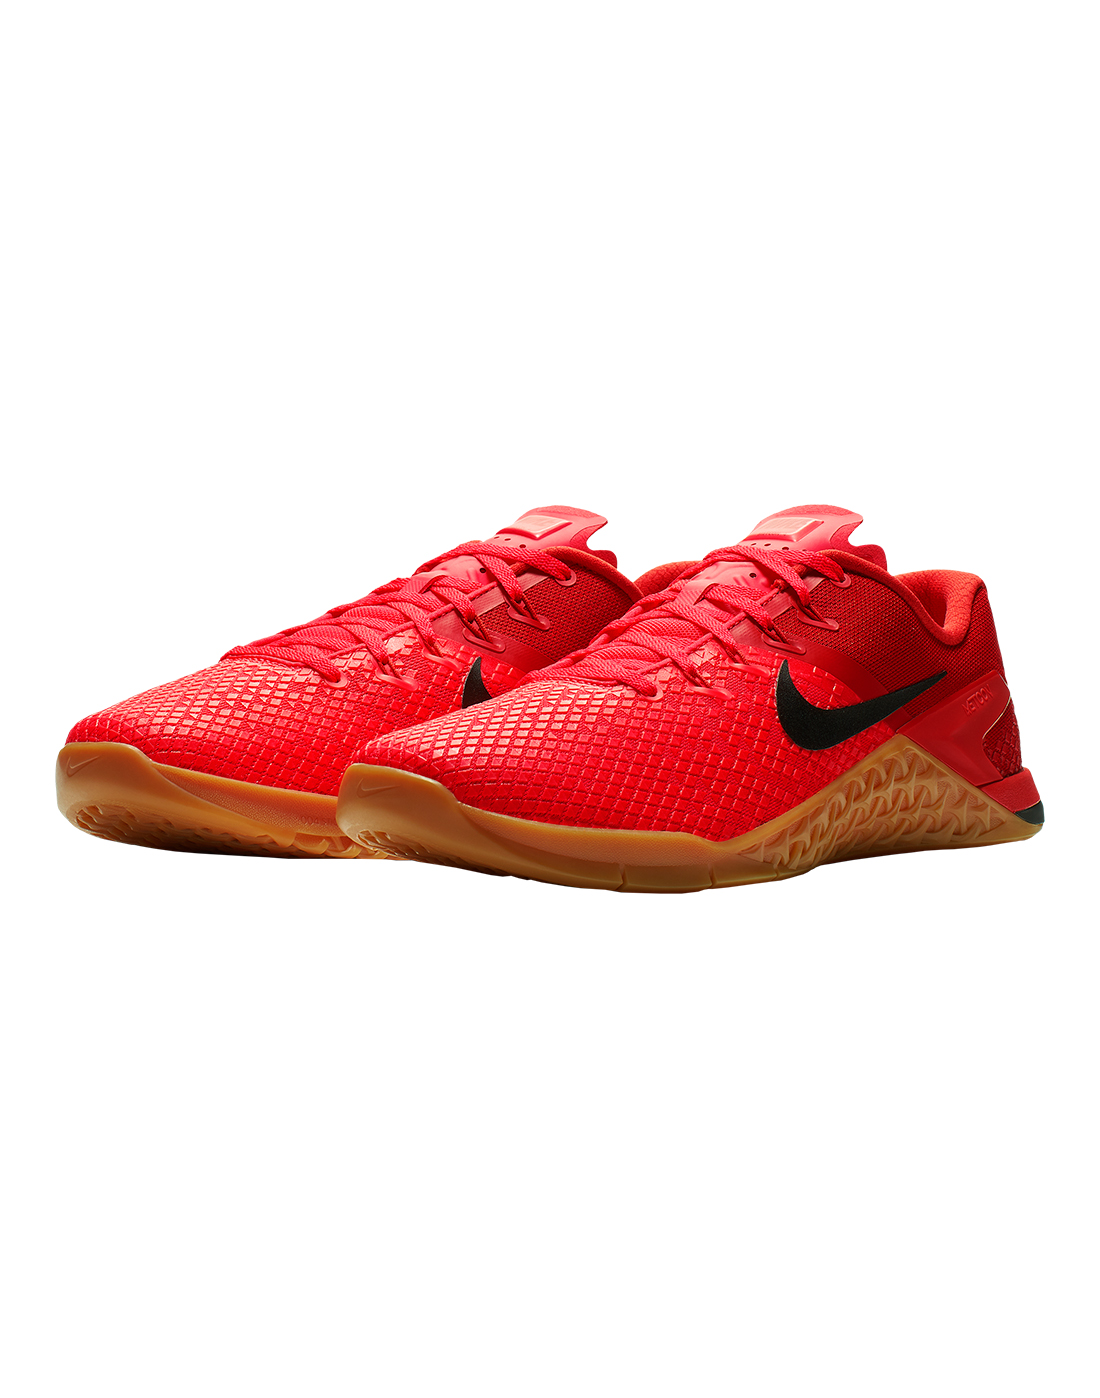 Men's Red Nike Metcon 4 XD | Life Style 